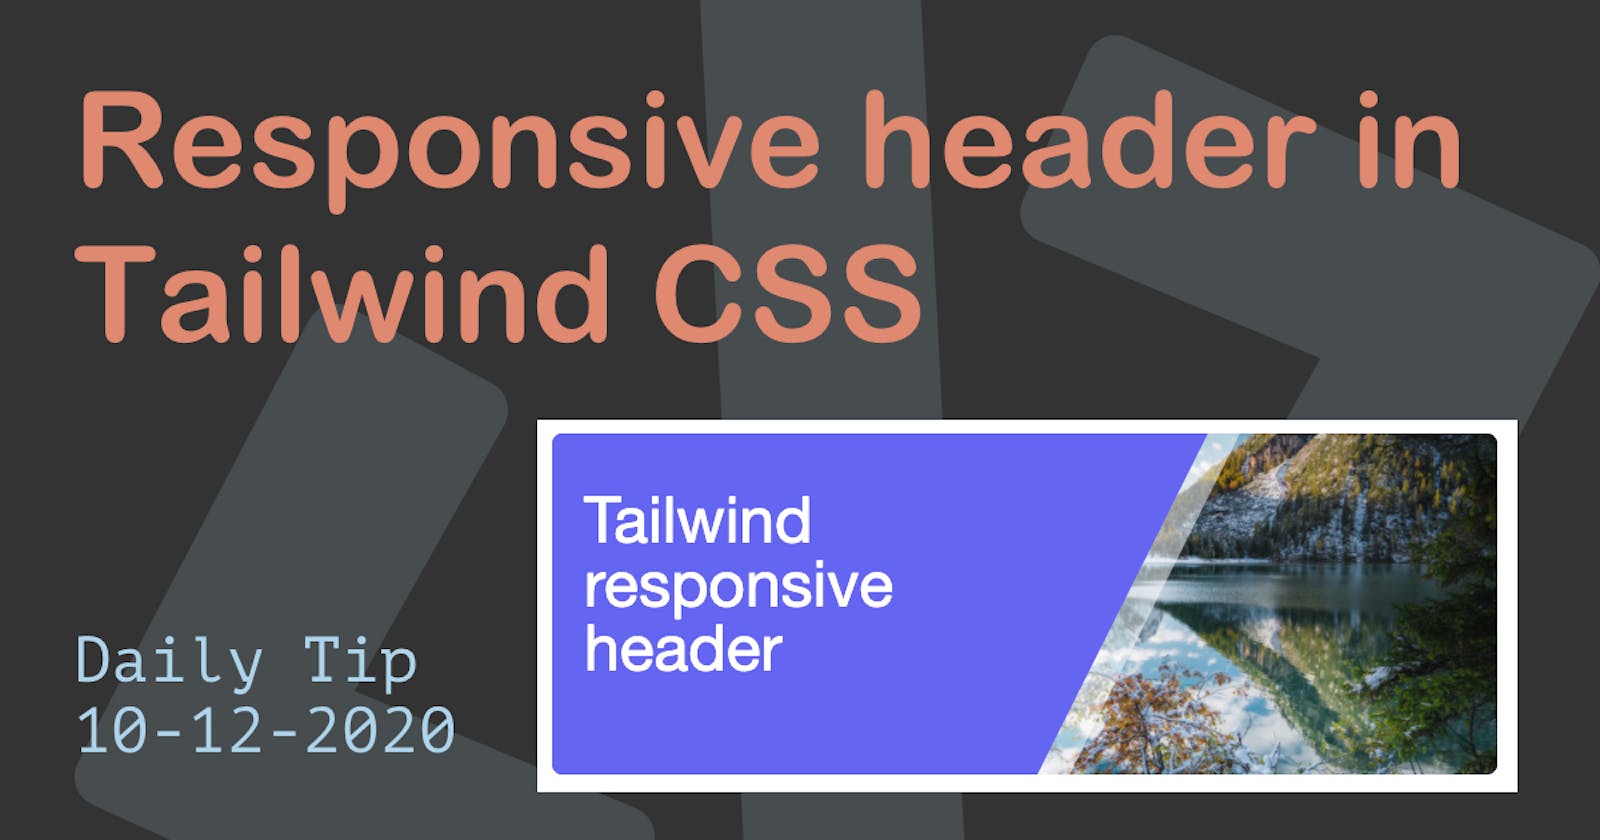 Responsive header in Tailwind CSS